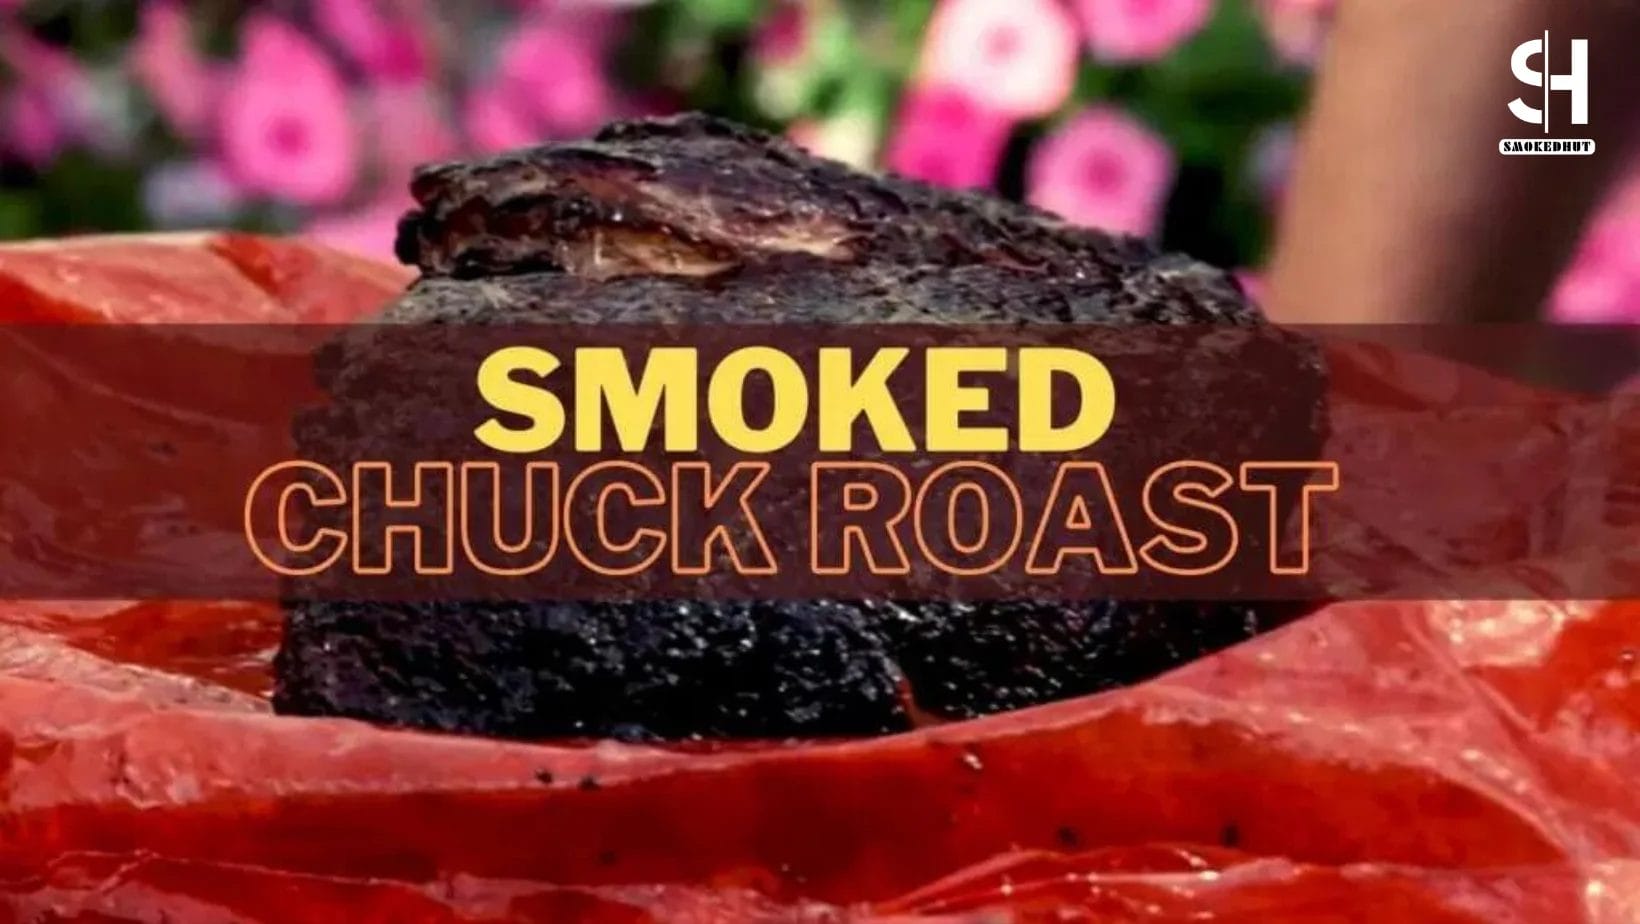 Smoked Chuck Roast - #1 Chuck Roast Recipe